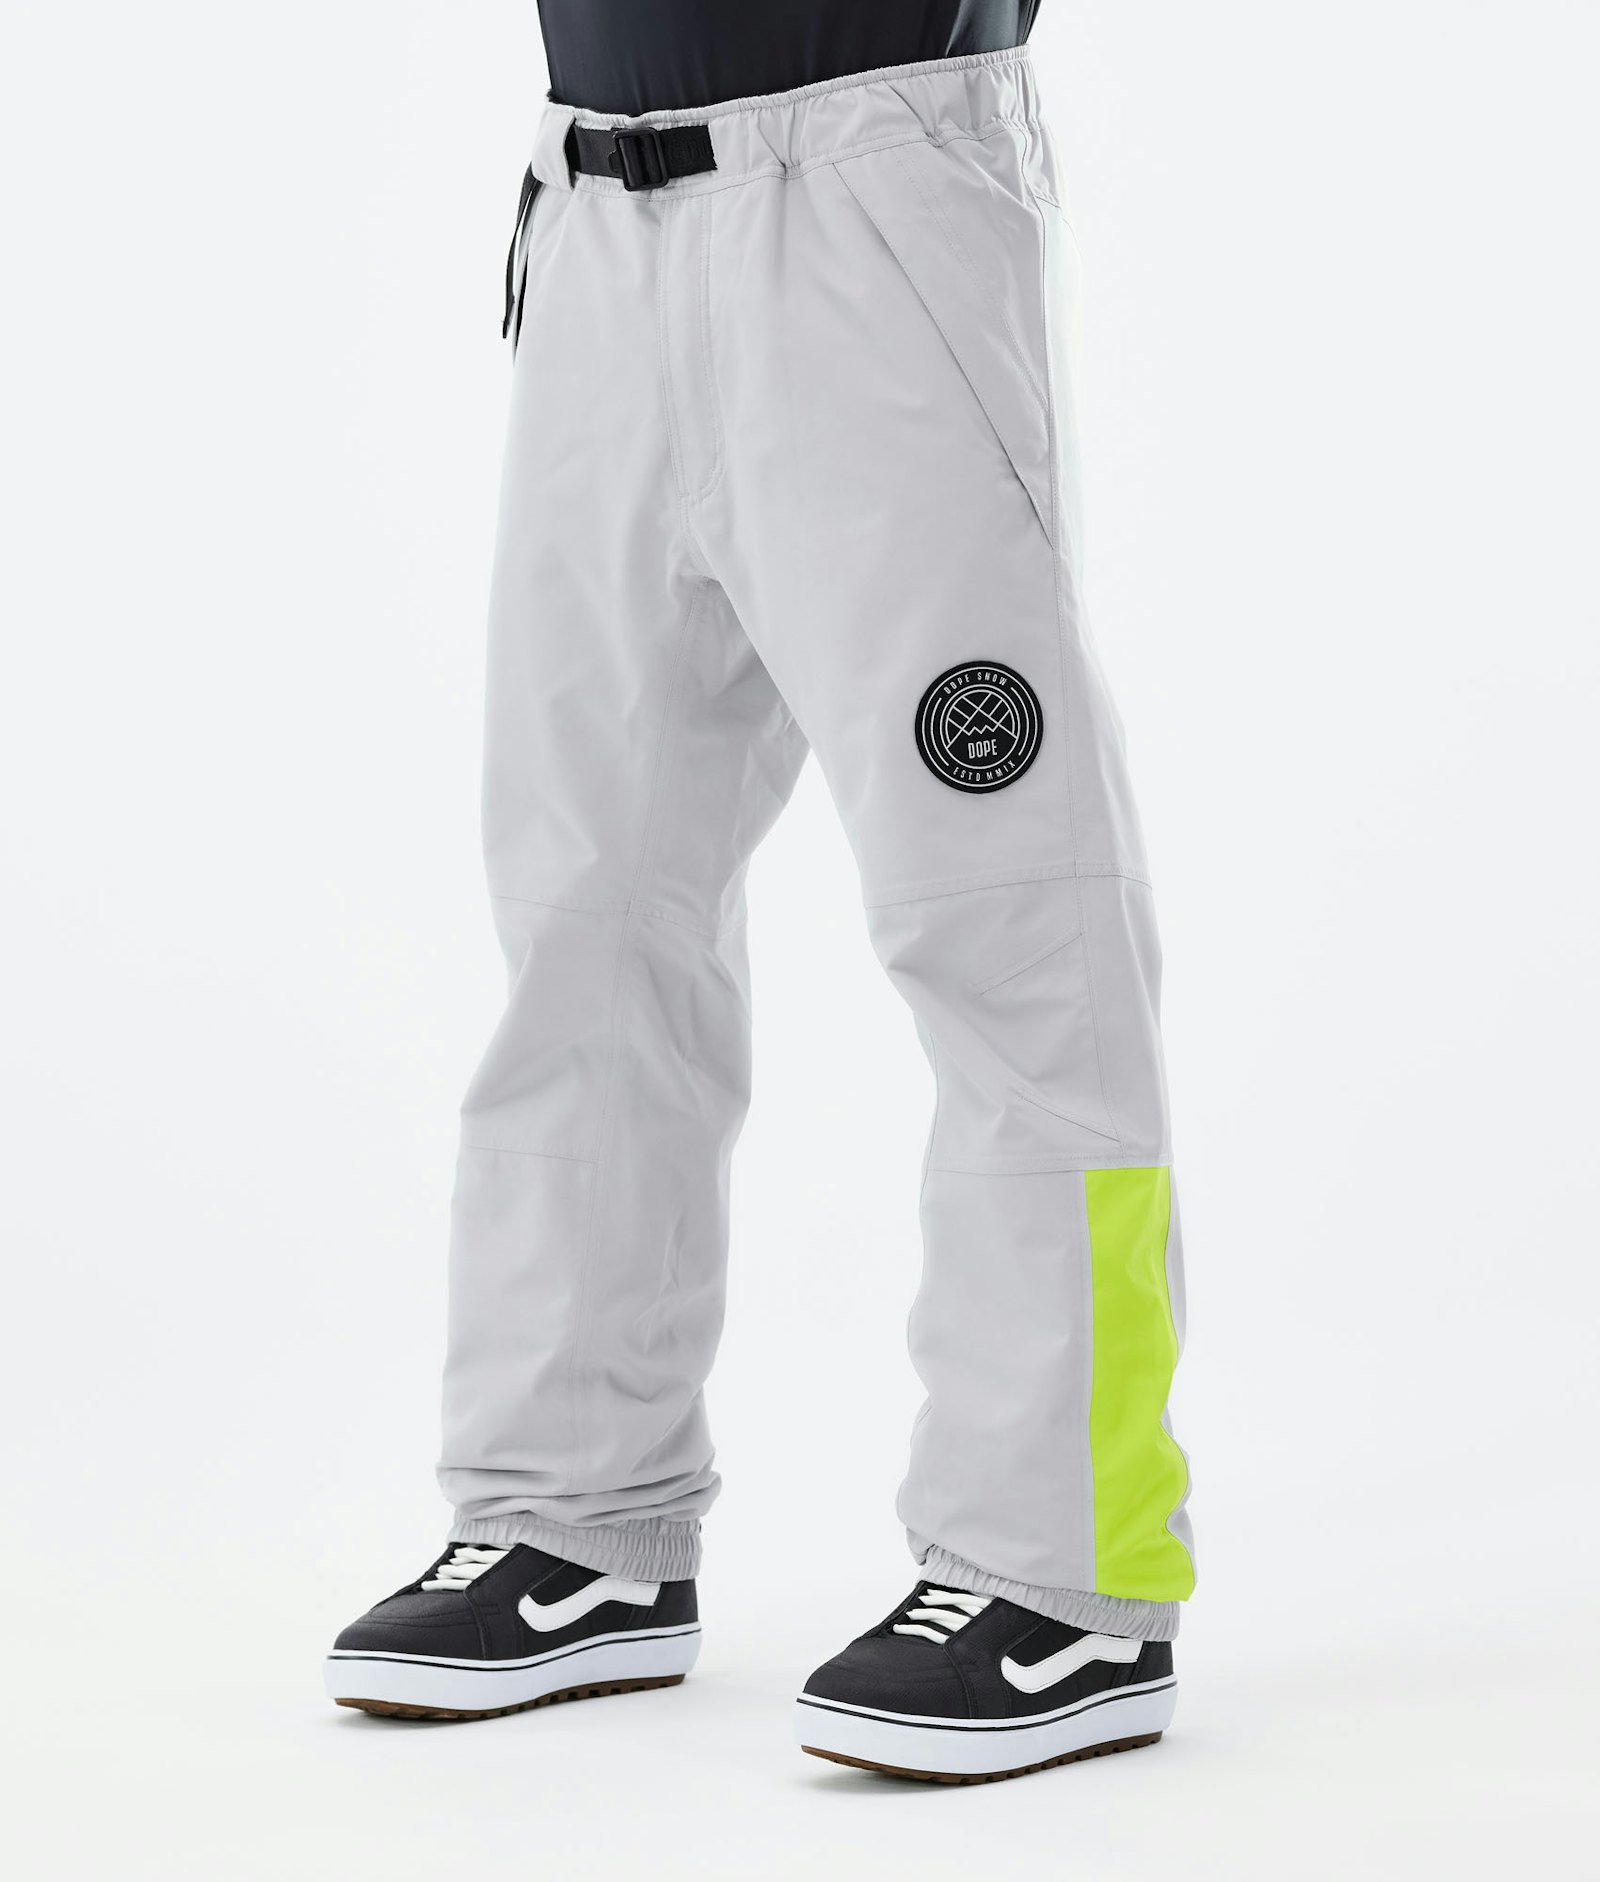 Blizzard LE Snowboard Pants Men Limited Edition Stripe Light Grey Renewed, Image 1 of 4